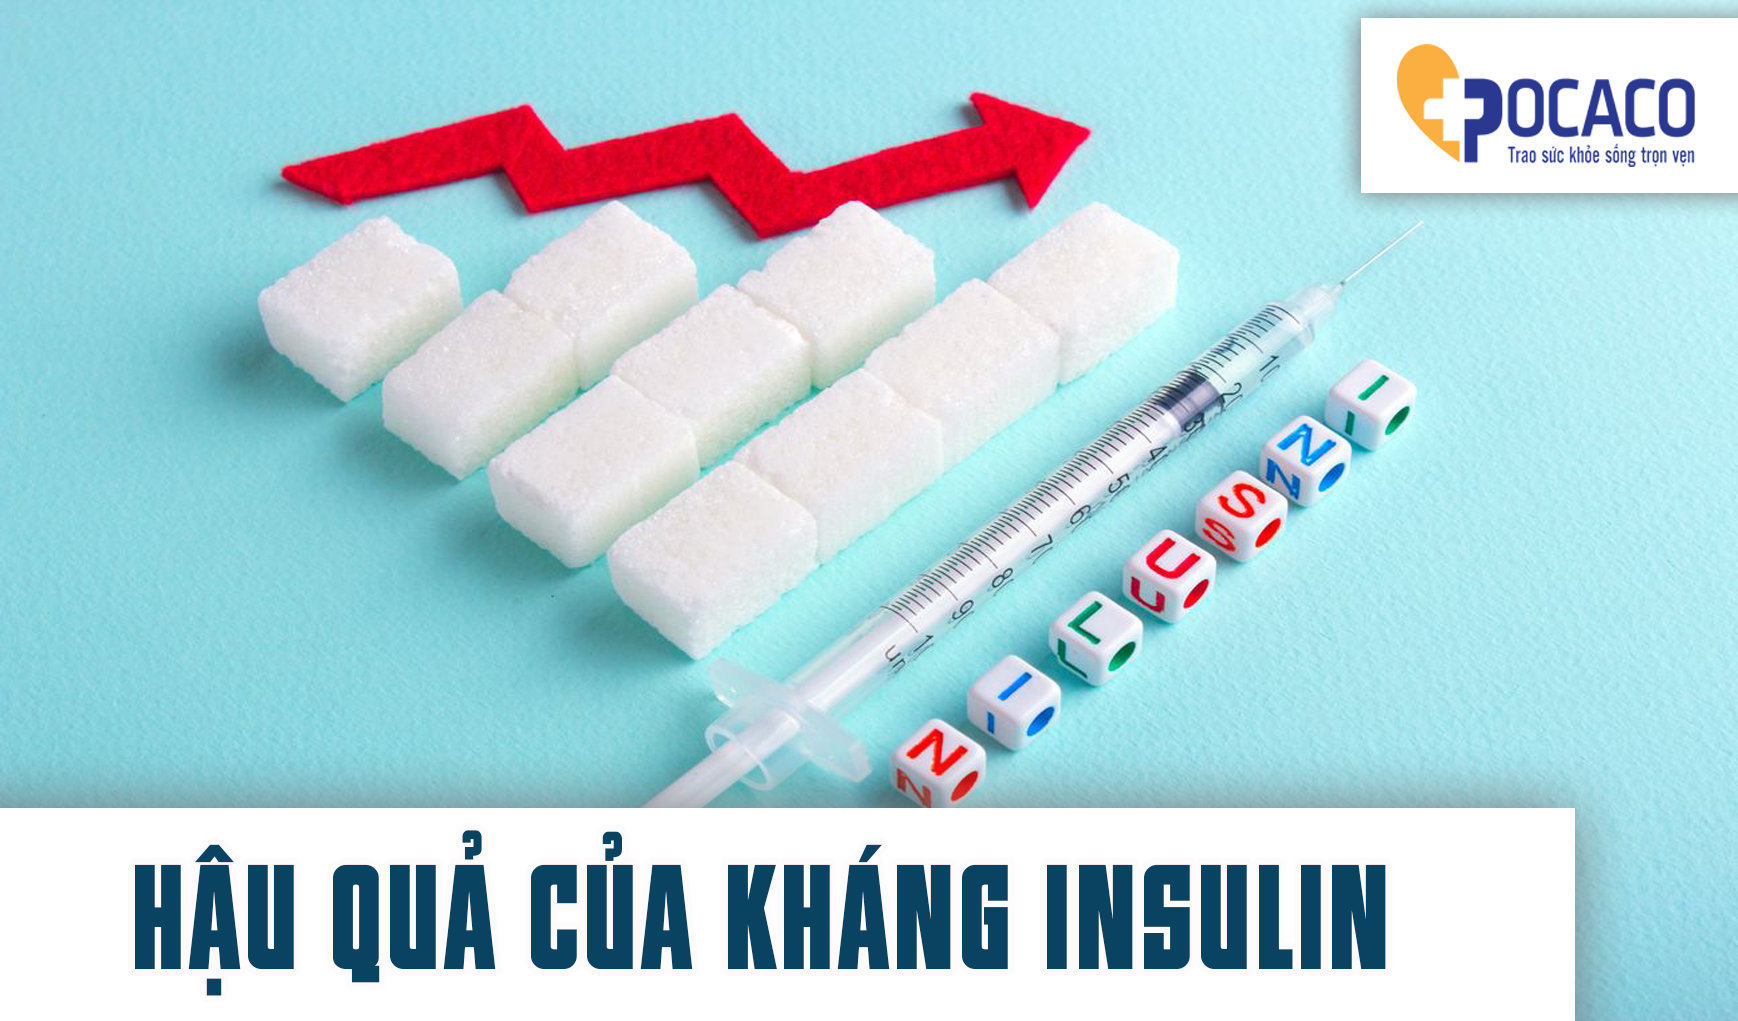 ngan-ngua-tinh-trang-khang-insulin-mot-cach-tu-nhien-3